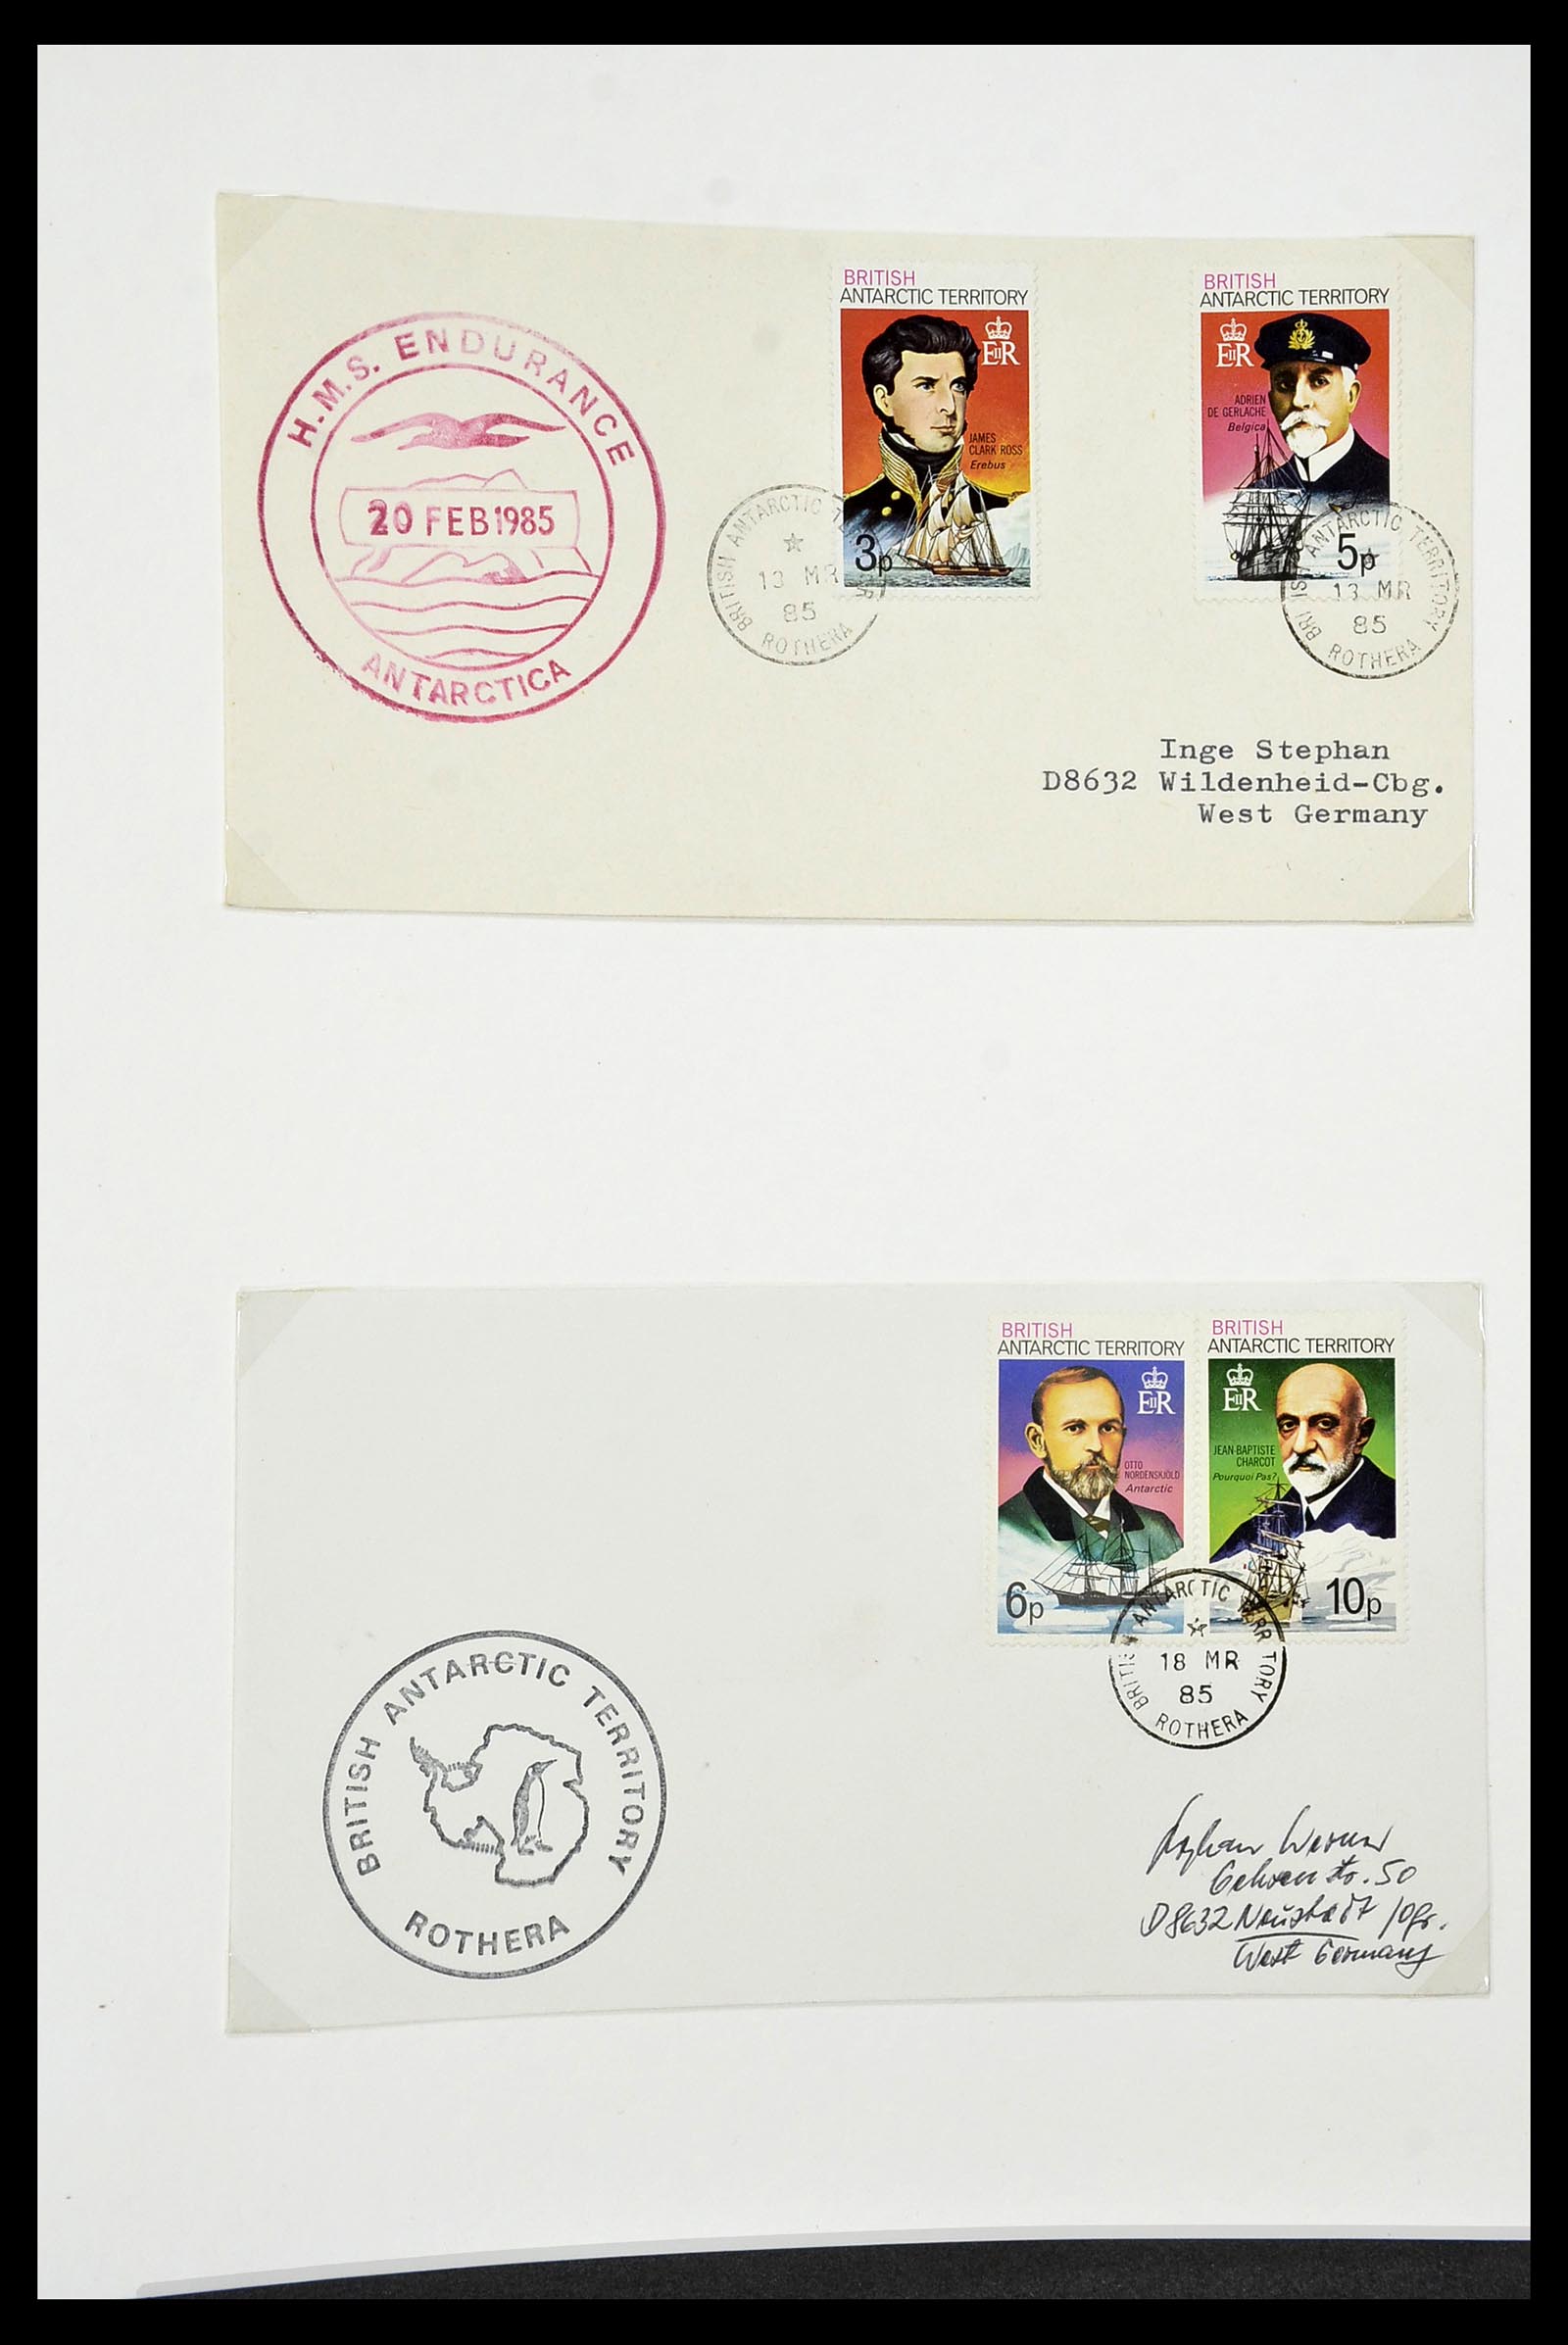 34105 077 - Stamp collection 34105 British Antarctica 1963-1993.